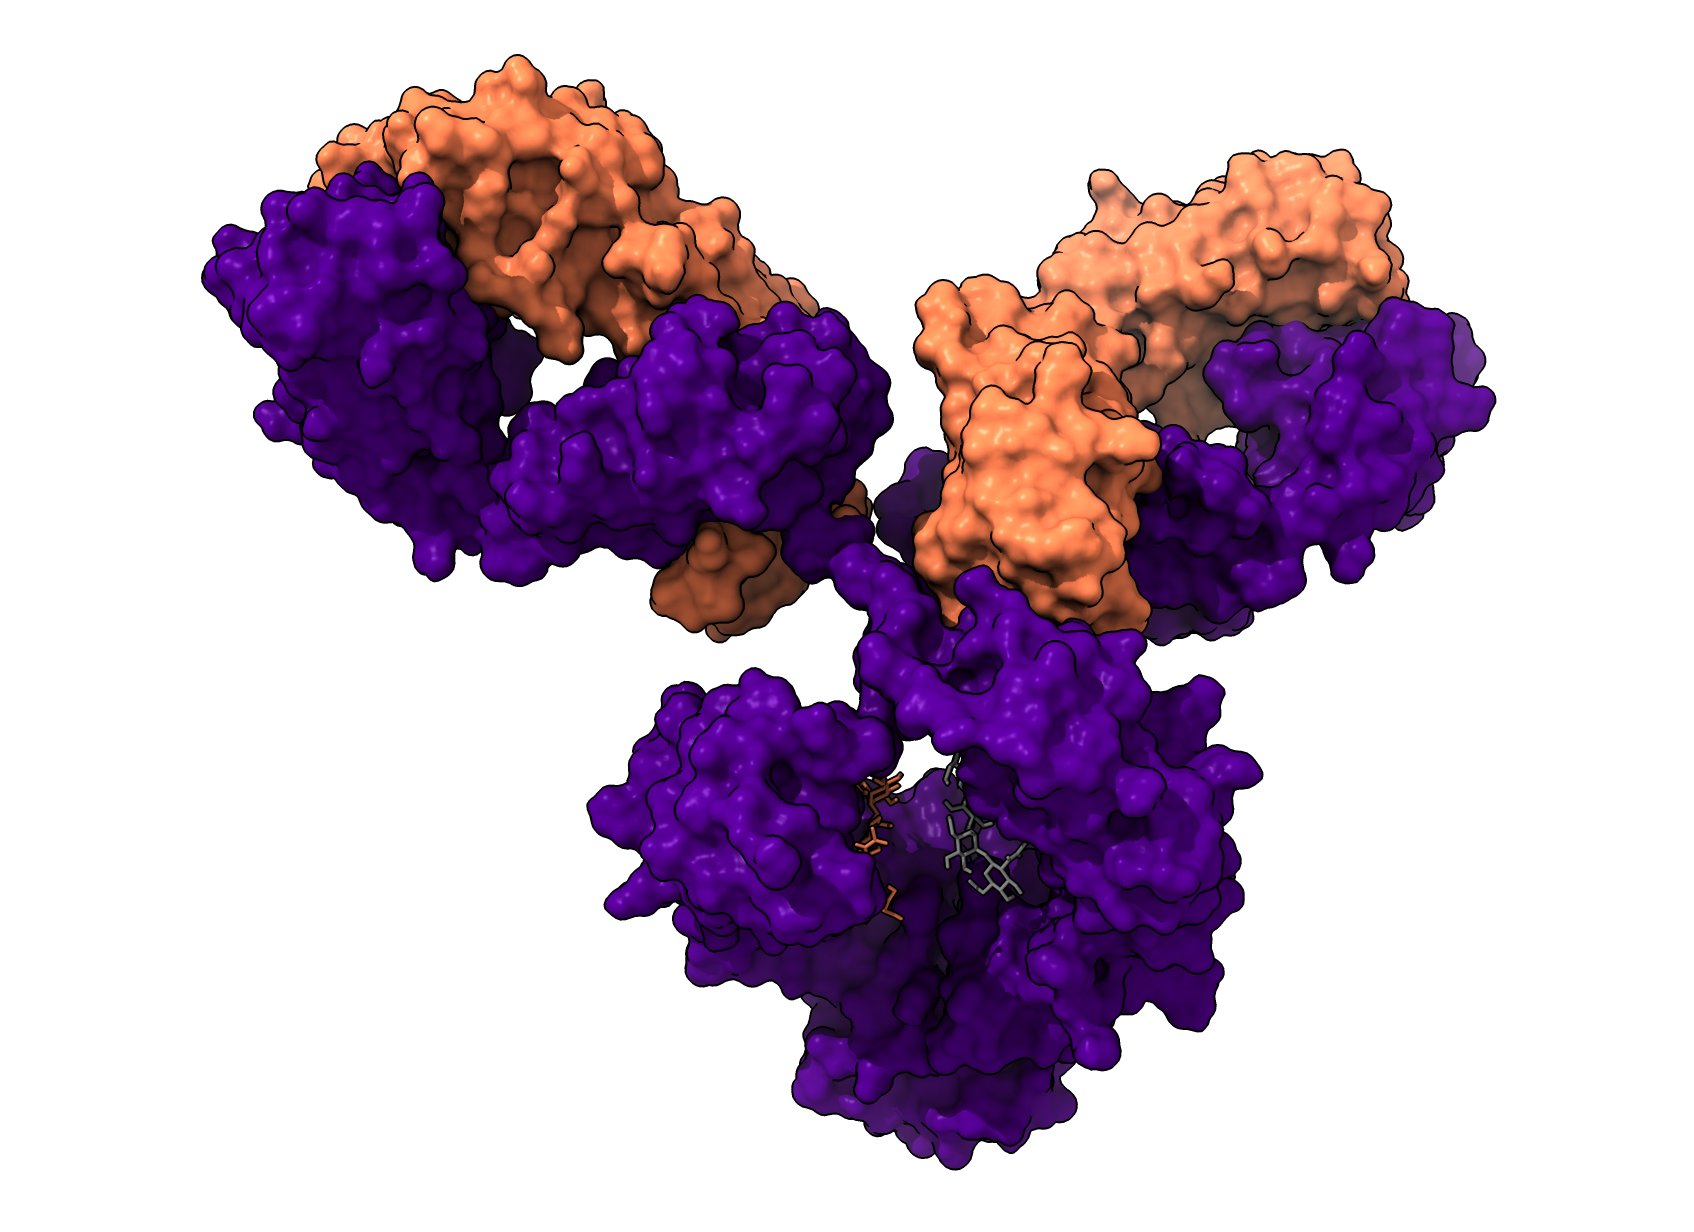 3D structure of an antibody